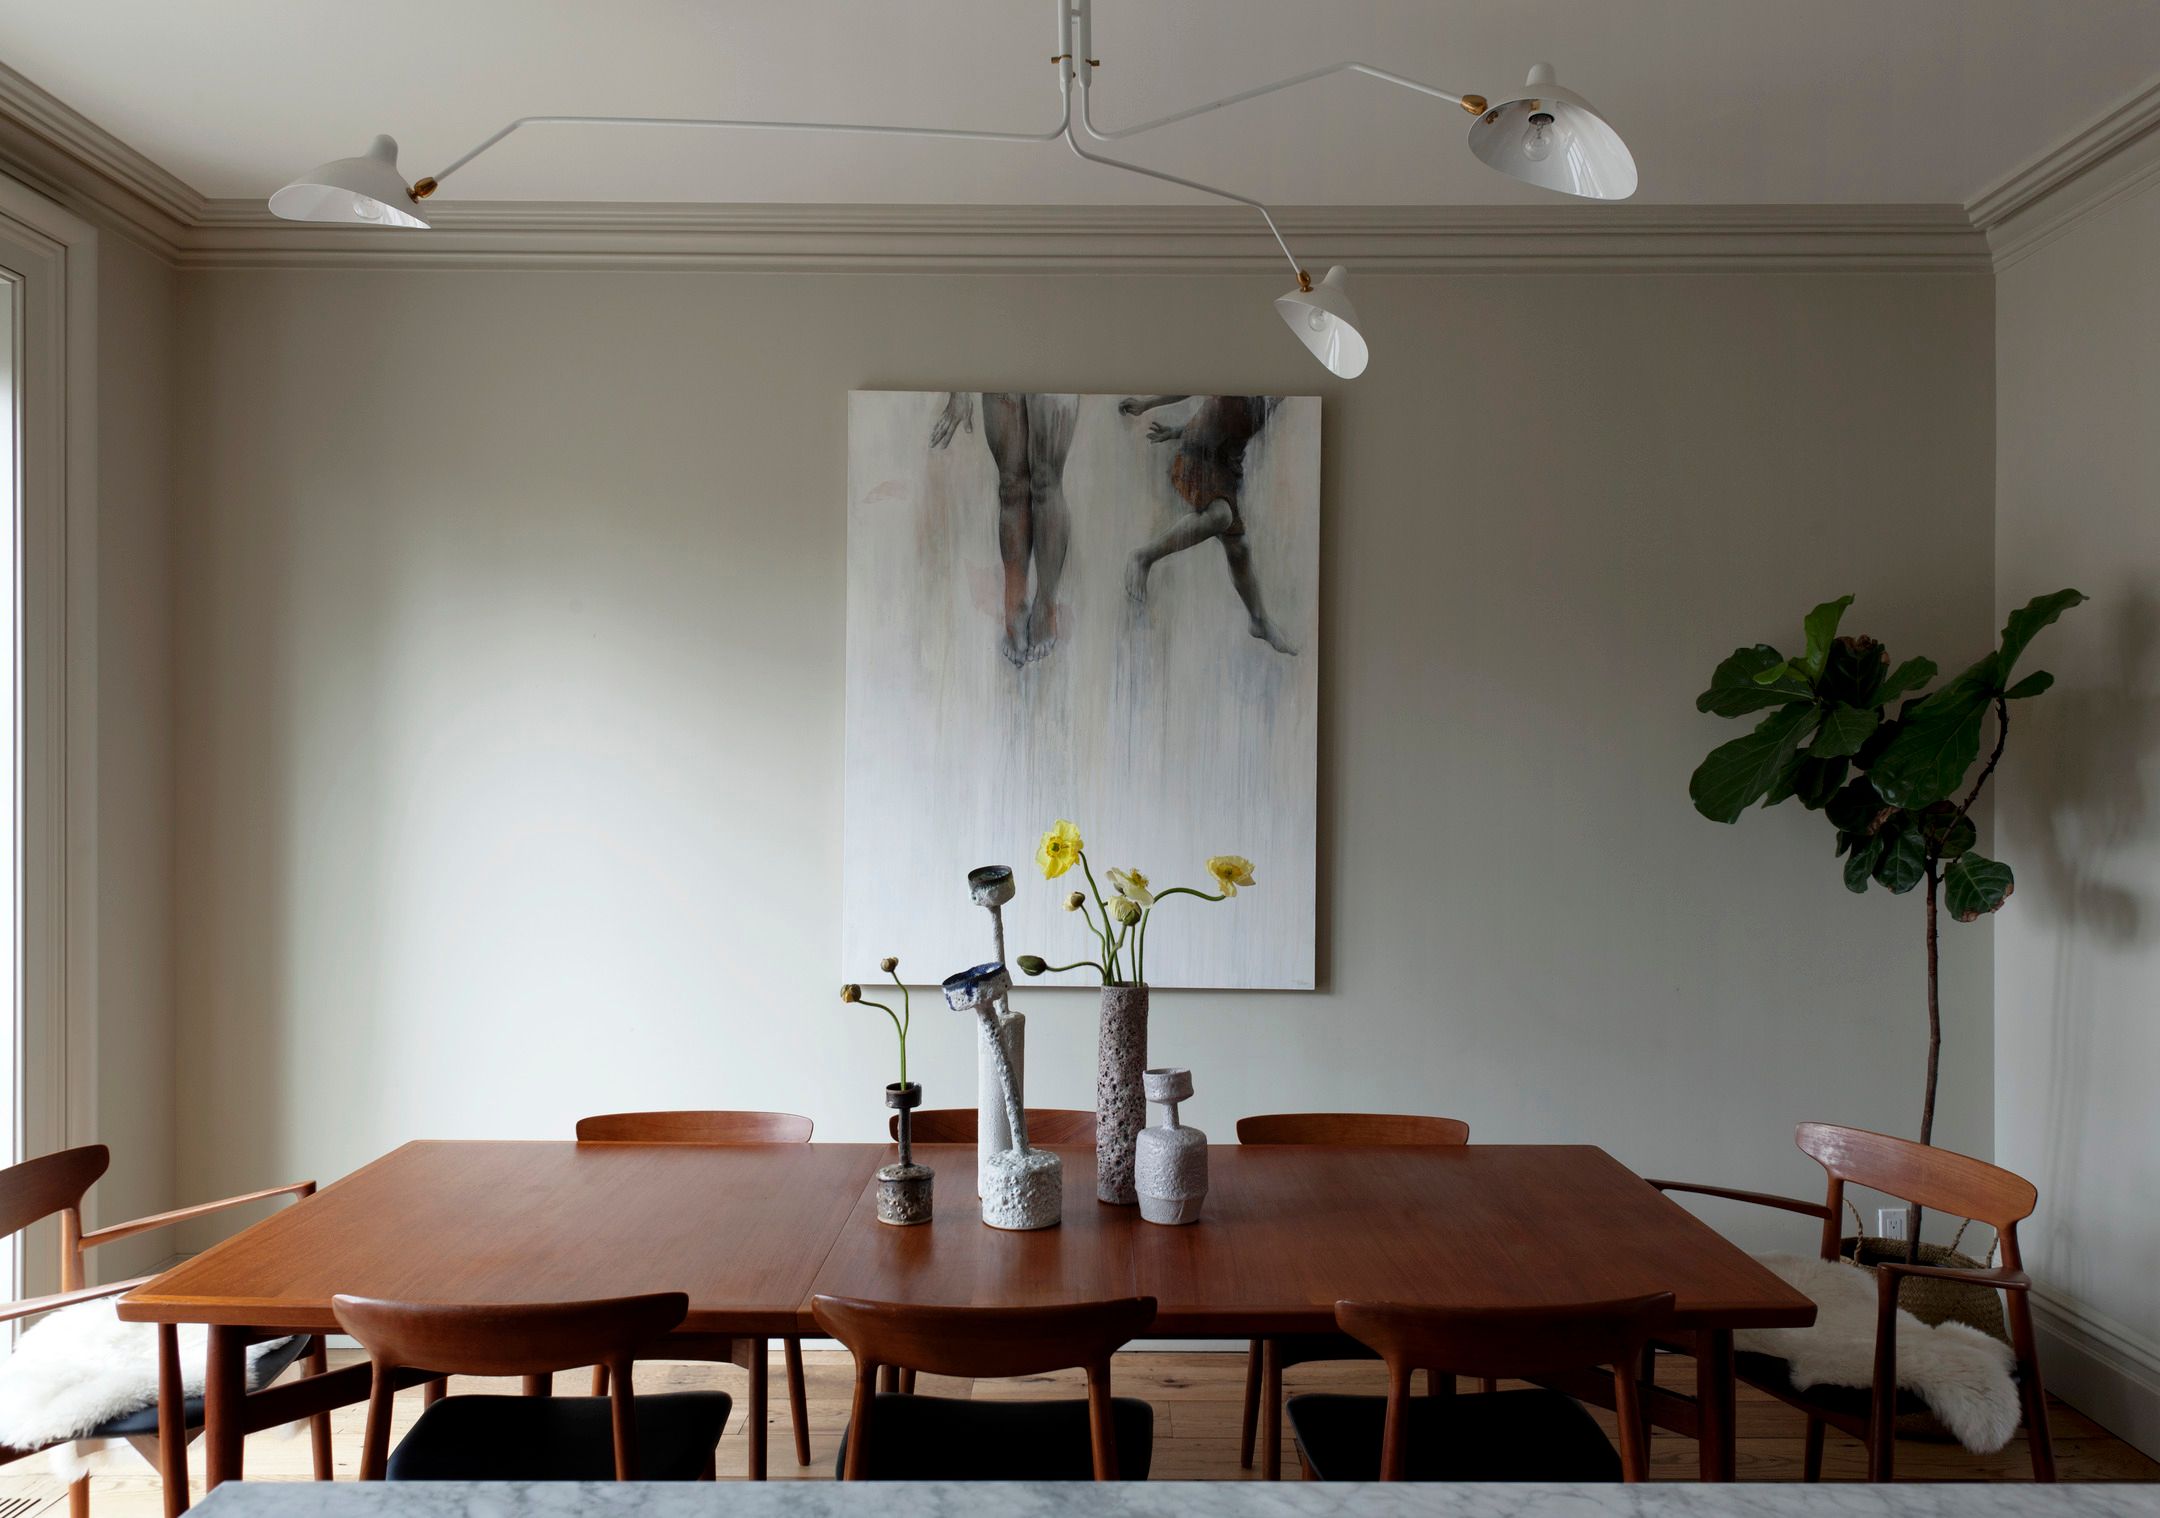 Boerum Hill Italianate, No. 2 Dining Room